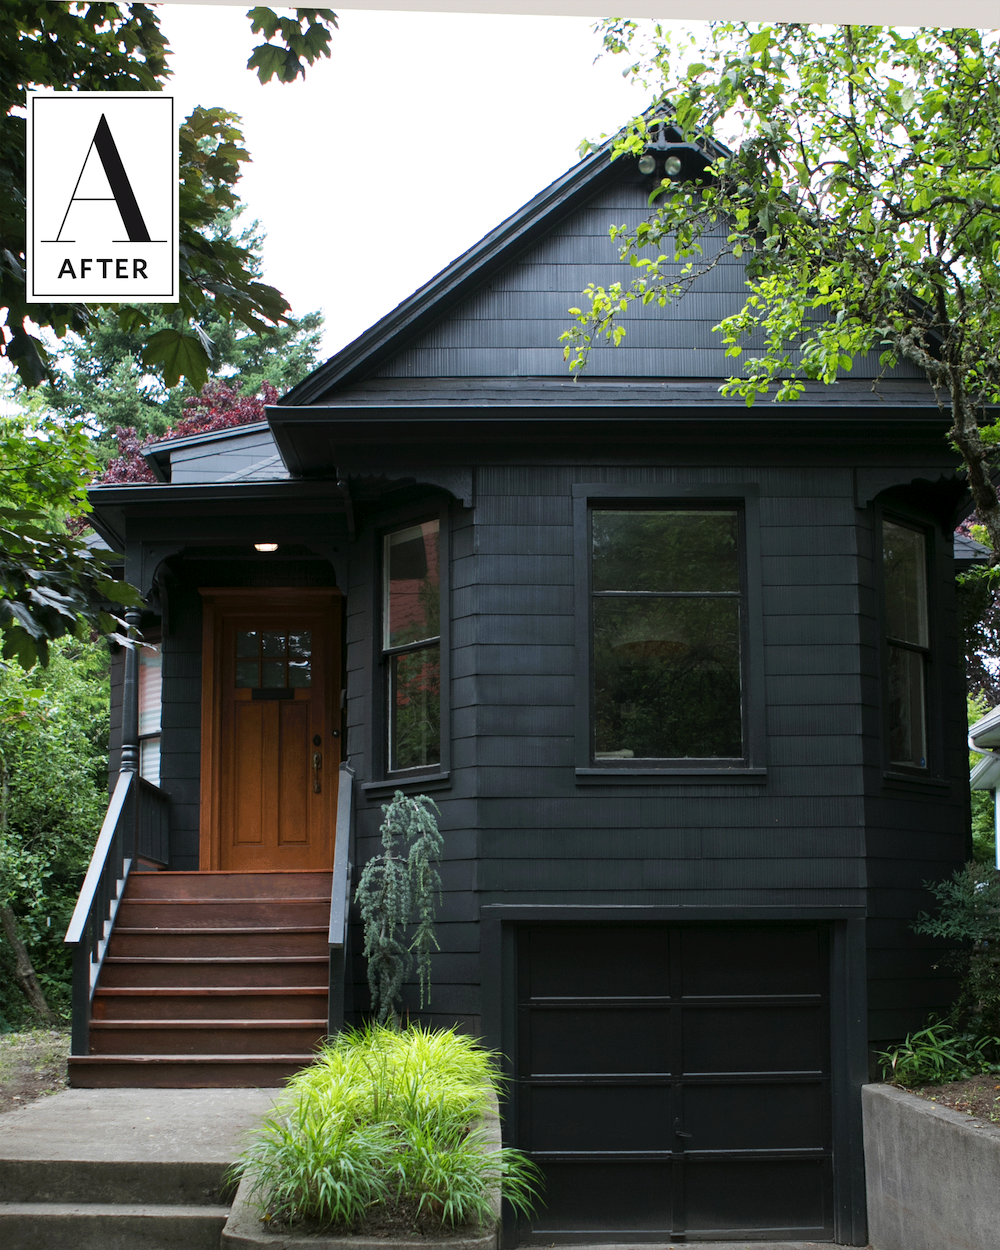 Via Apartment Therapy Black house - dark exterior house color